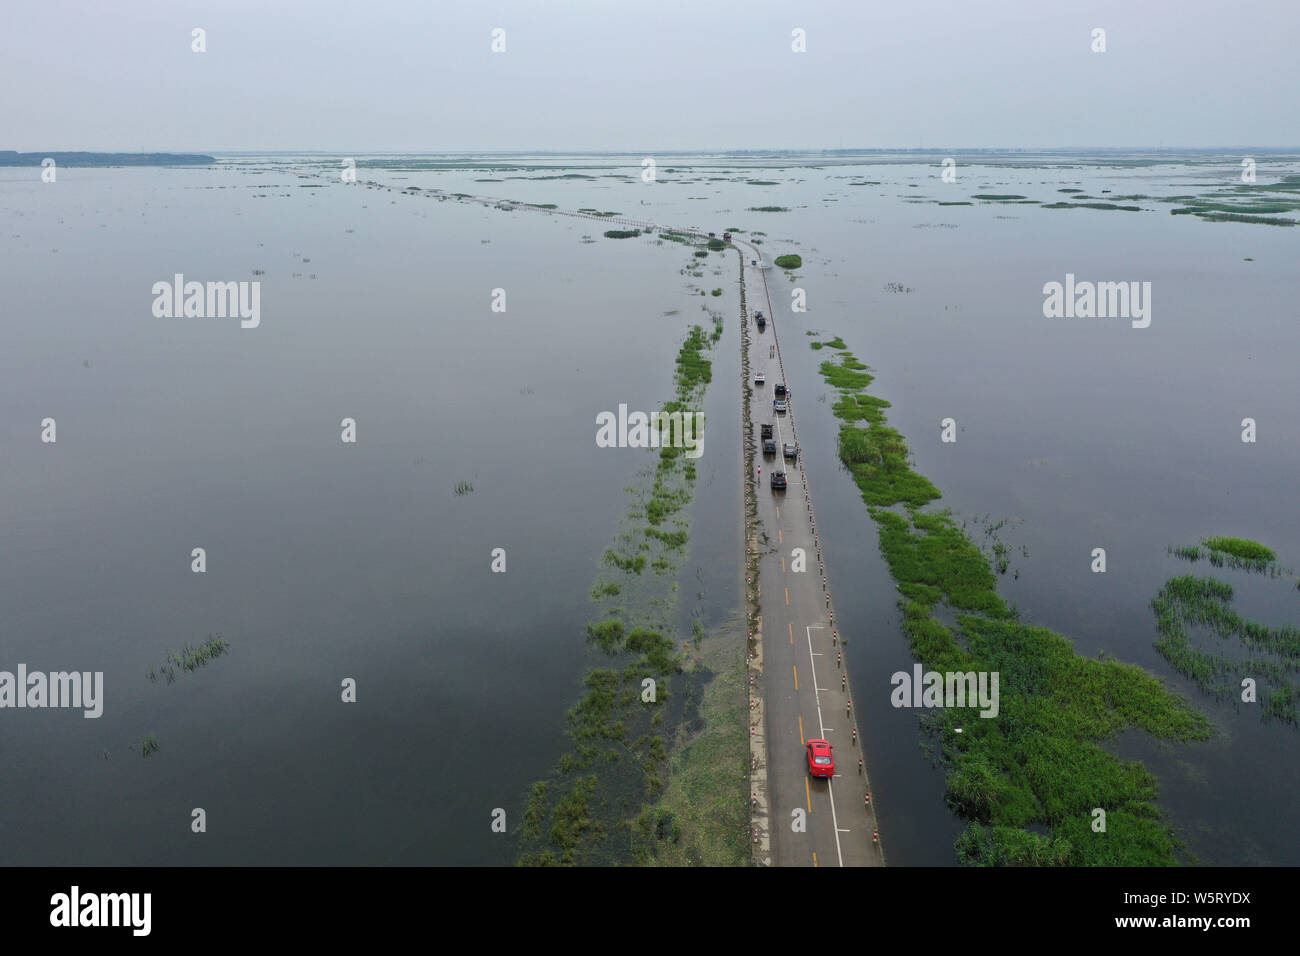 Cars drive on the Yongwu Road submerged in rising water of the Poyang Lake due to heavy rainfall in Jiujiang city, east China's Jiangxi province, 24 J Stock Photo